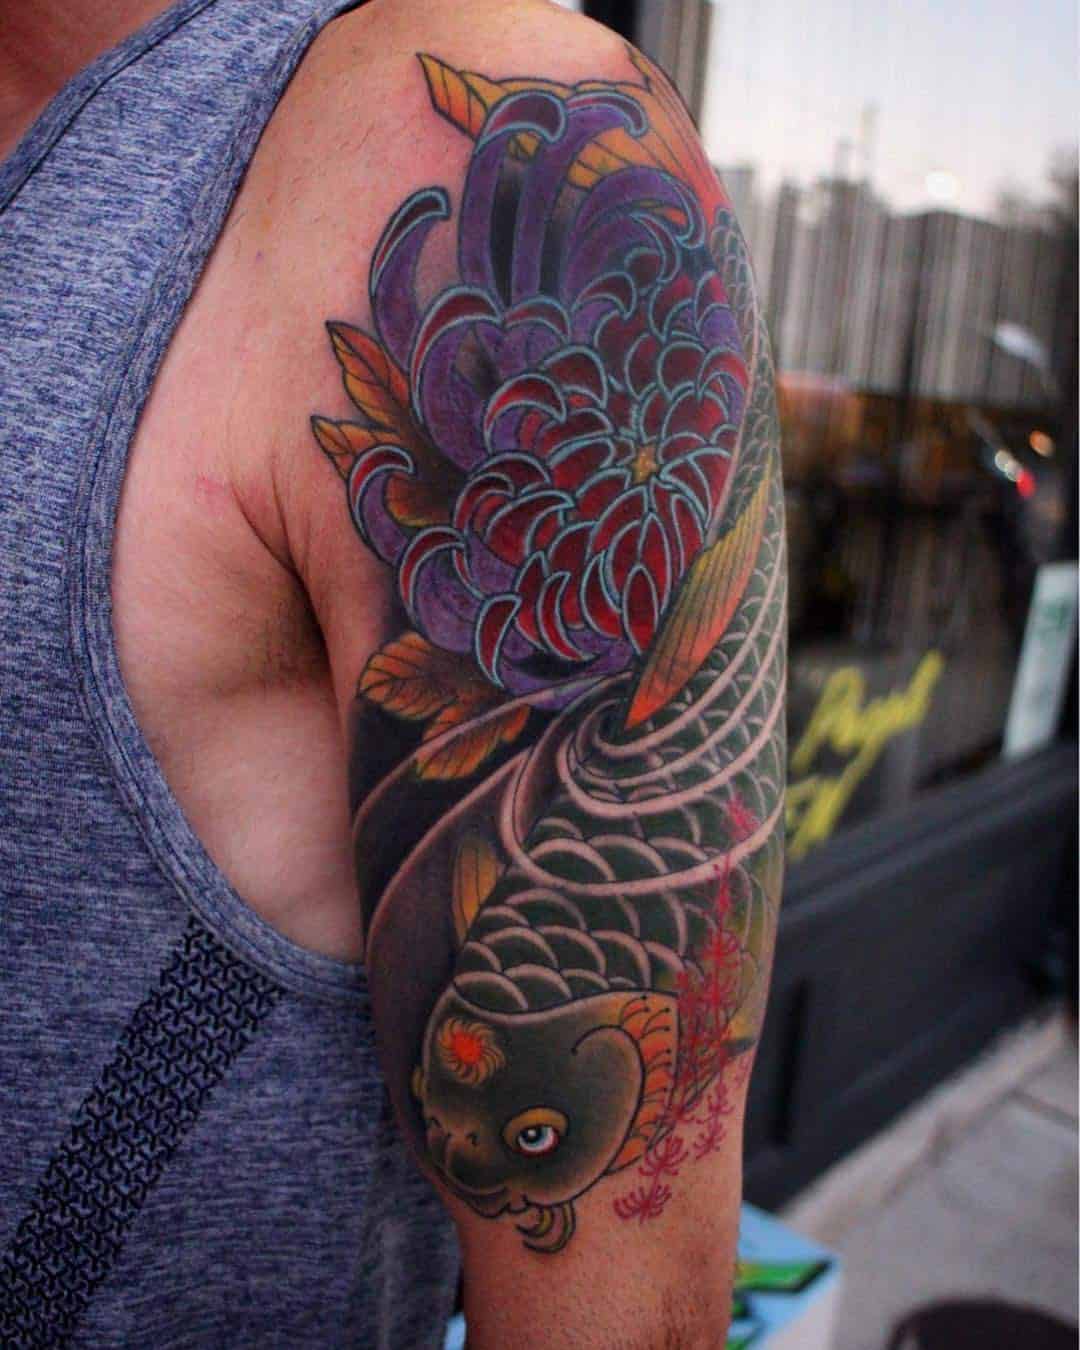 Japanese flower tattoo leg by jerrrroen on DeviantArt